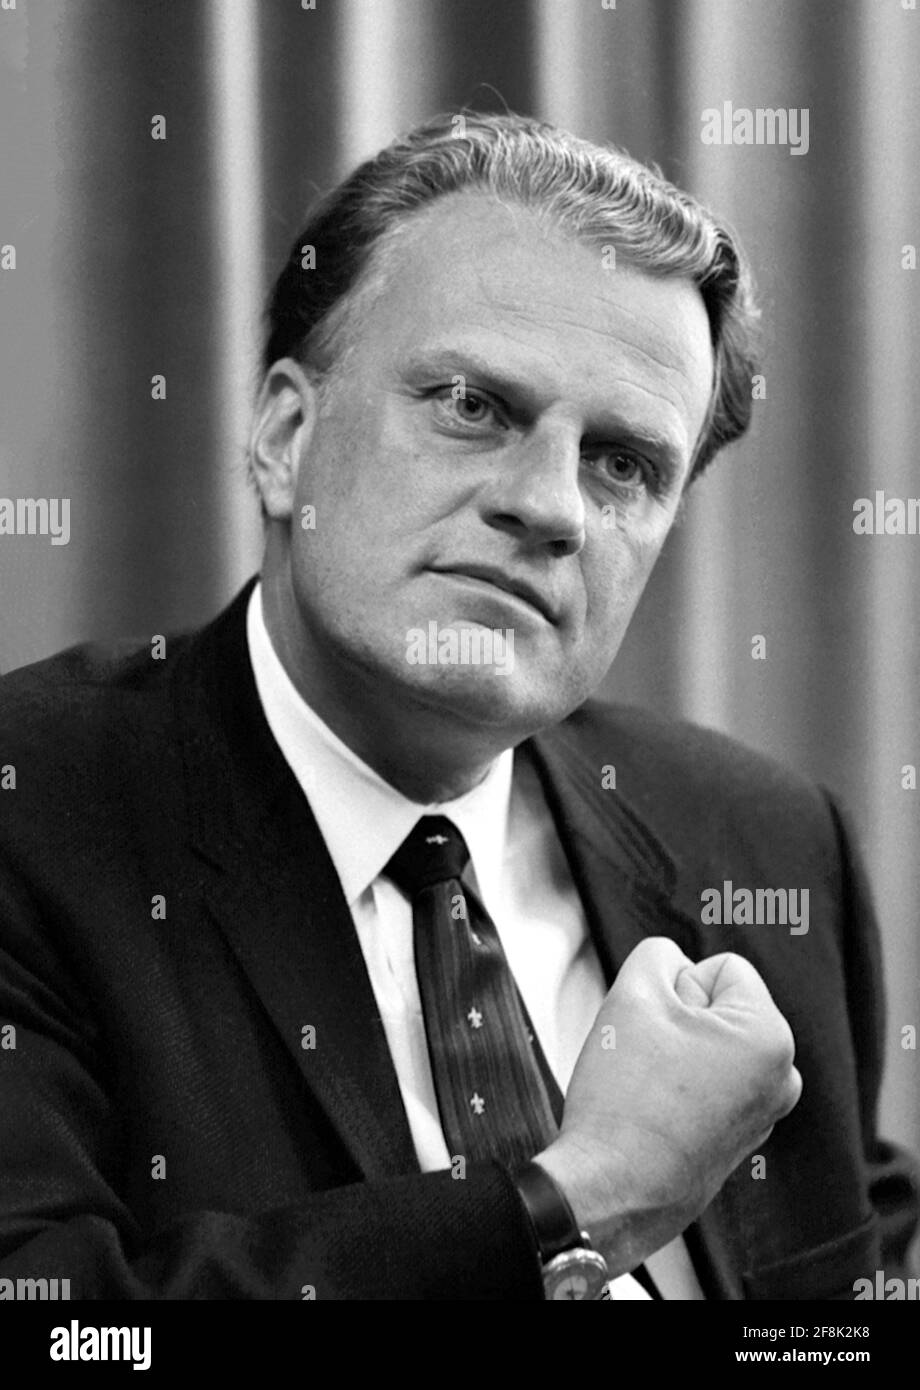 Billy Graham. Portrait of the American evangelist, William Franklin Graham Jr. (1918-2018), photo by Warren K. Leffler, 1966 Stock Photo